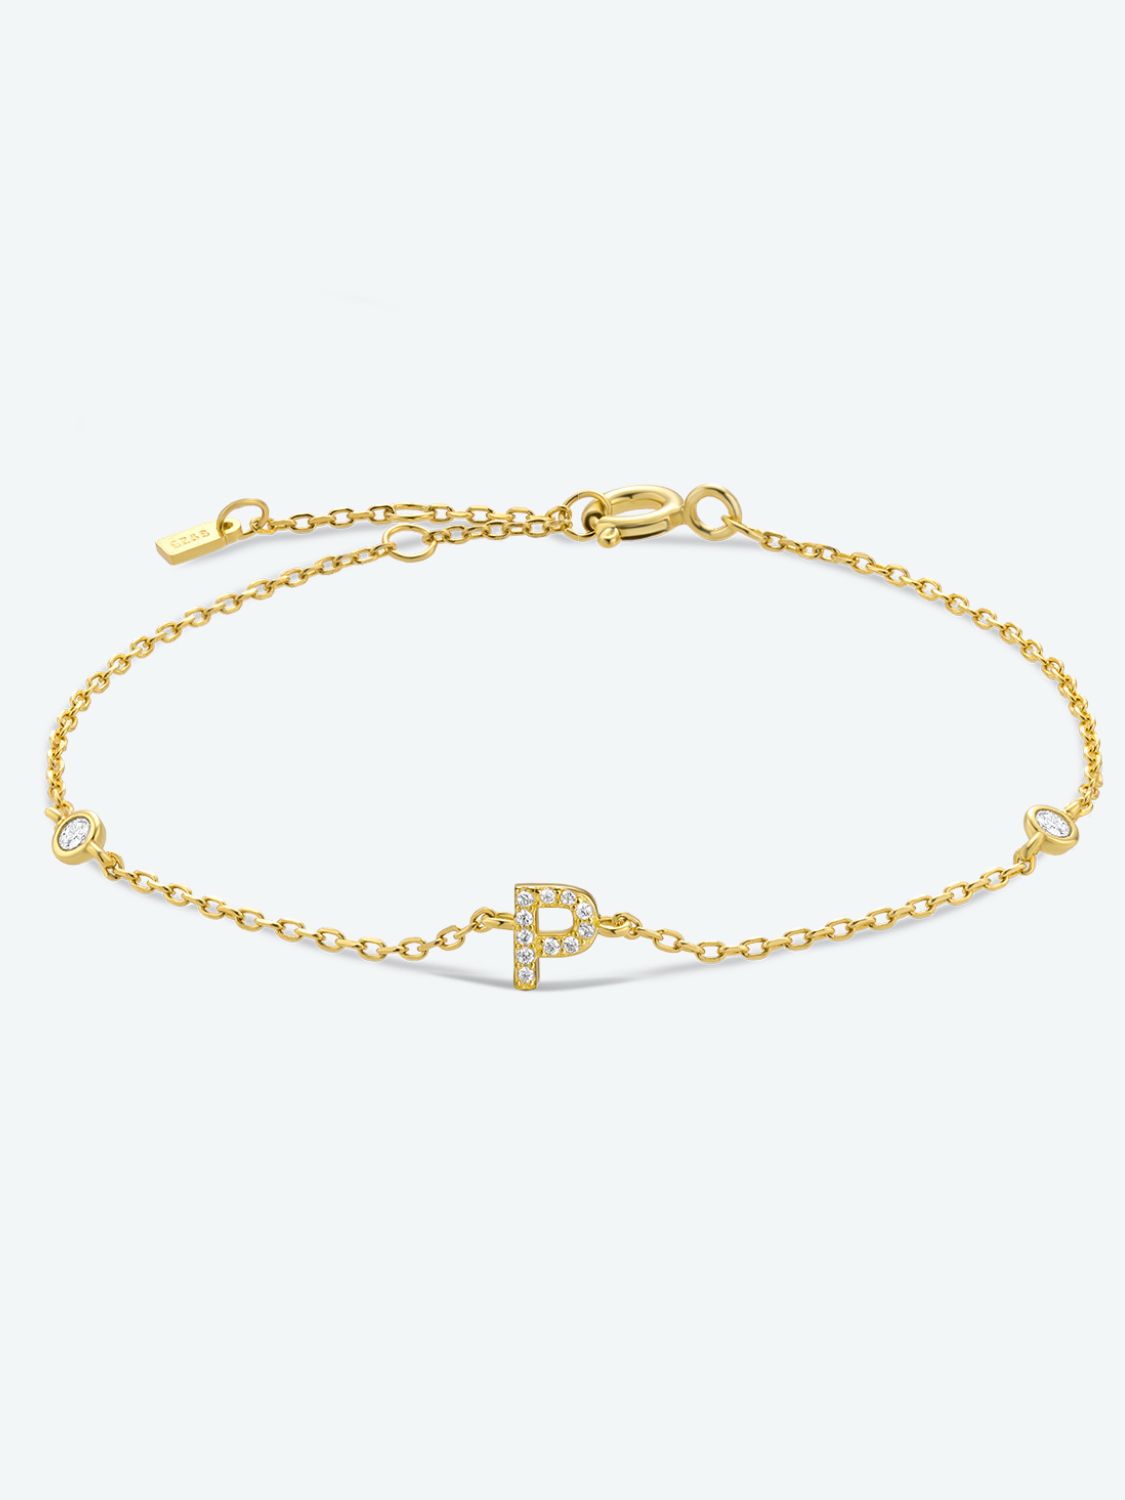 L To P Zircon 925 Sterling Silver Bracelet - P-Gold / One Size - Women’s Jewelry - Bracelets - 25 - 2024